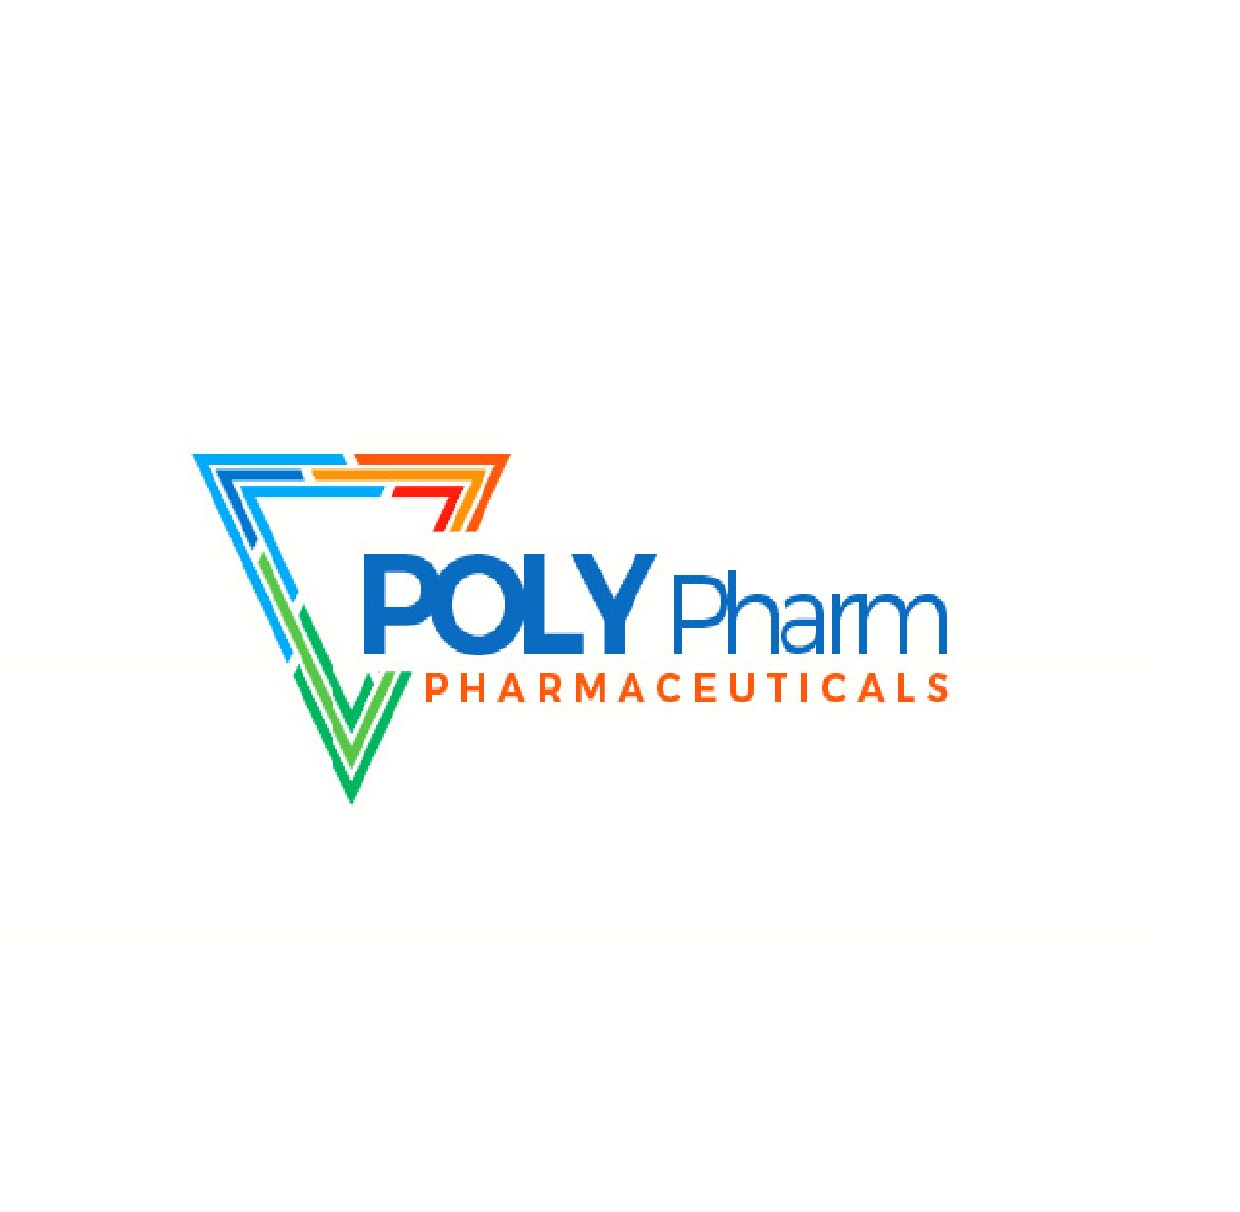 Polypharm Pharmaceutical Company